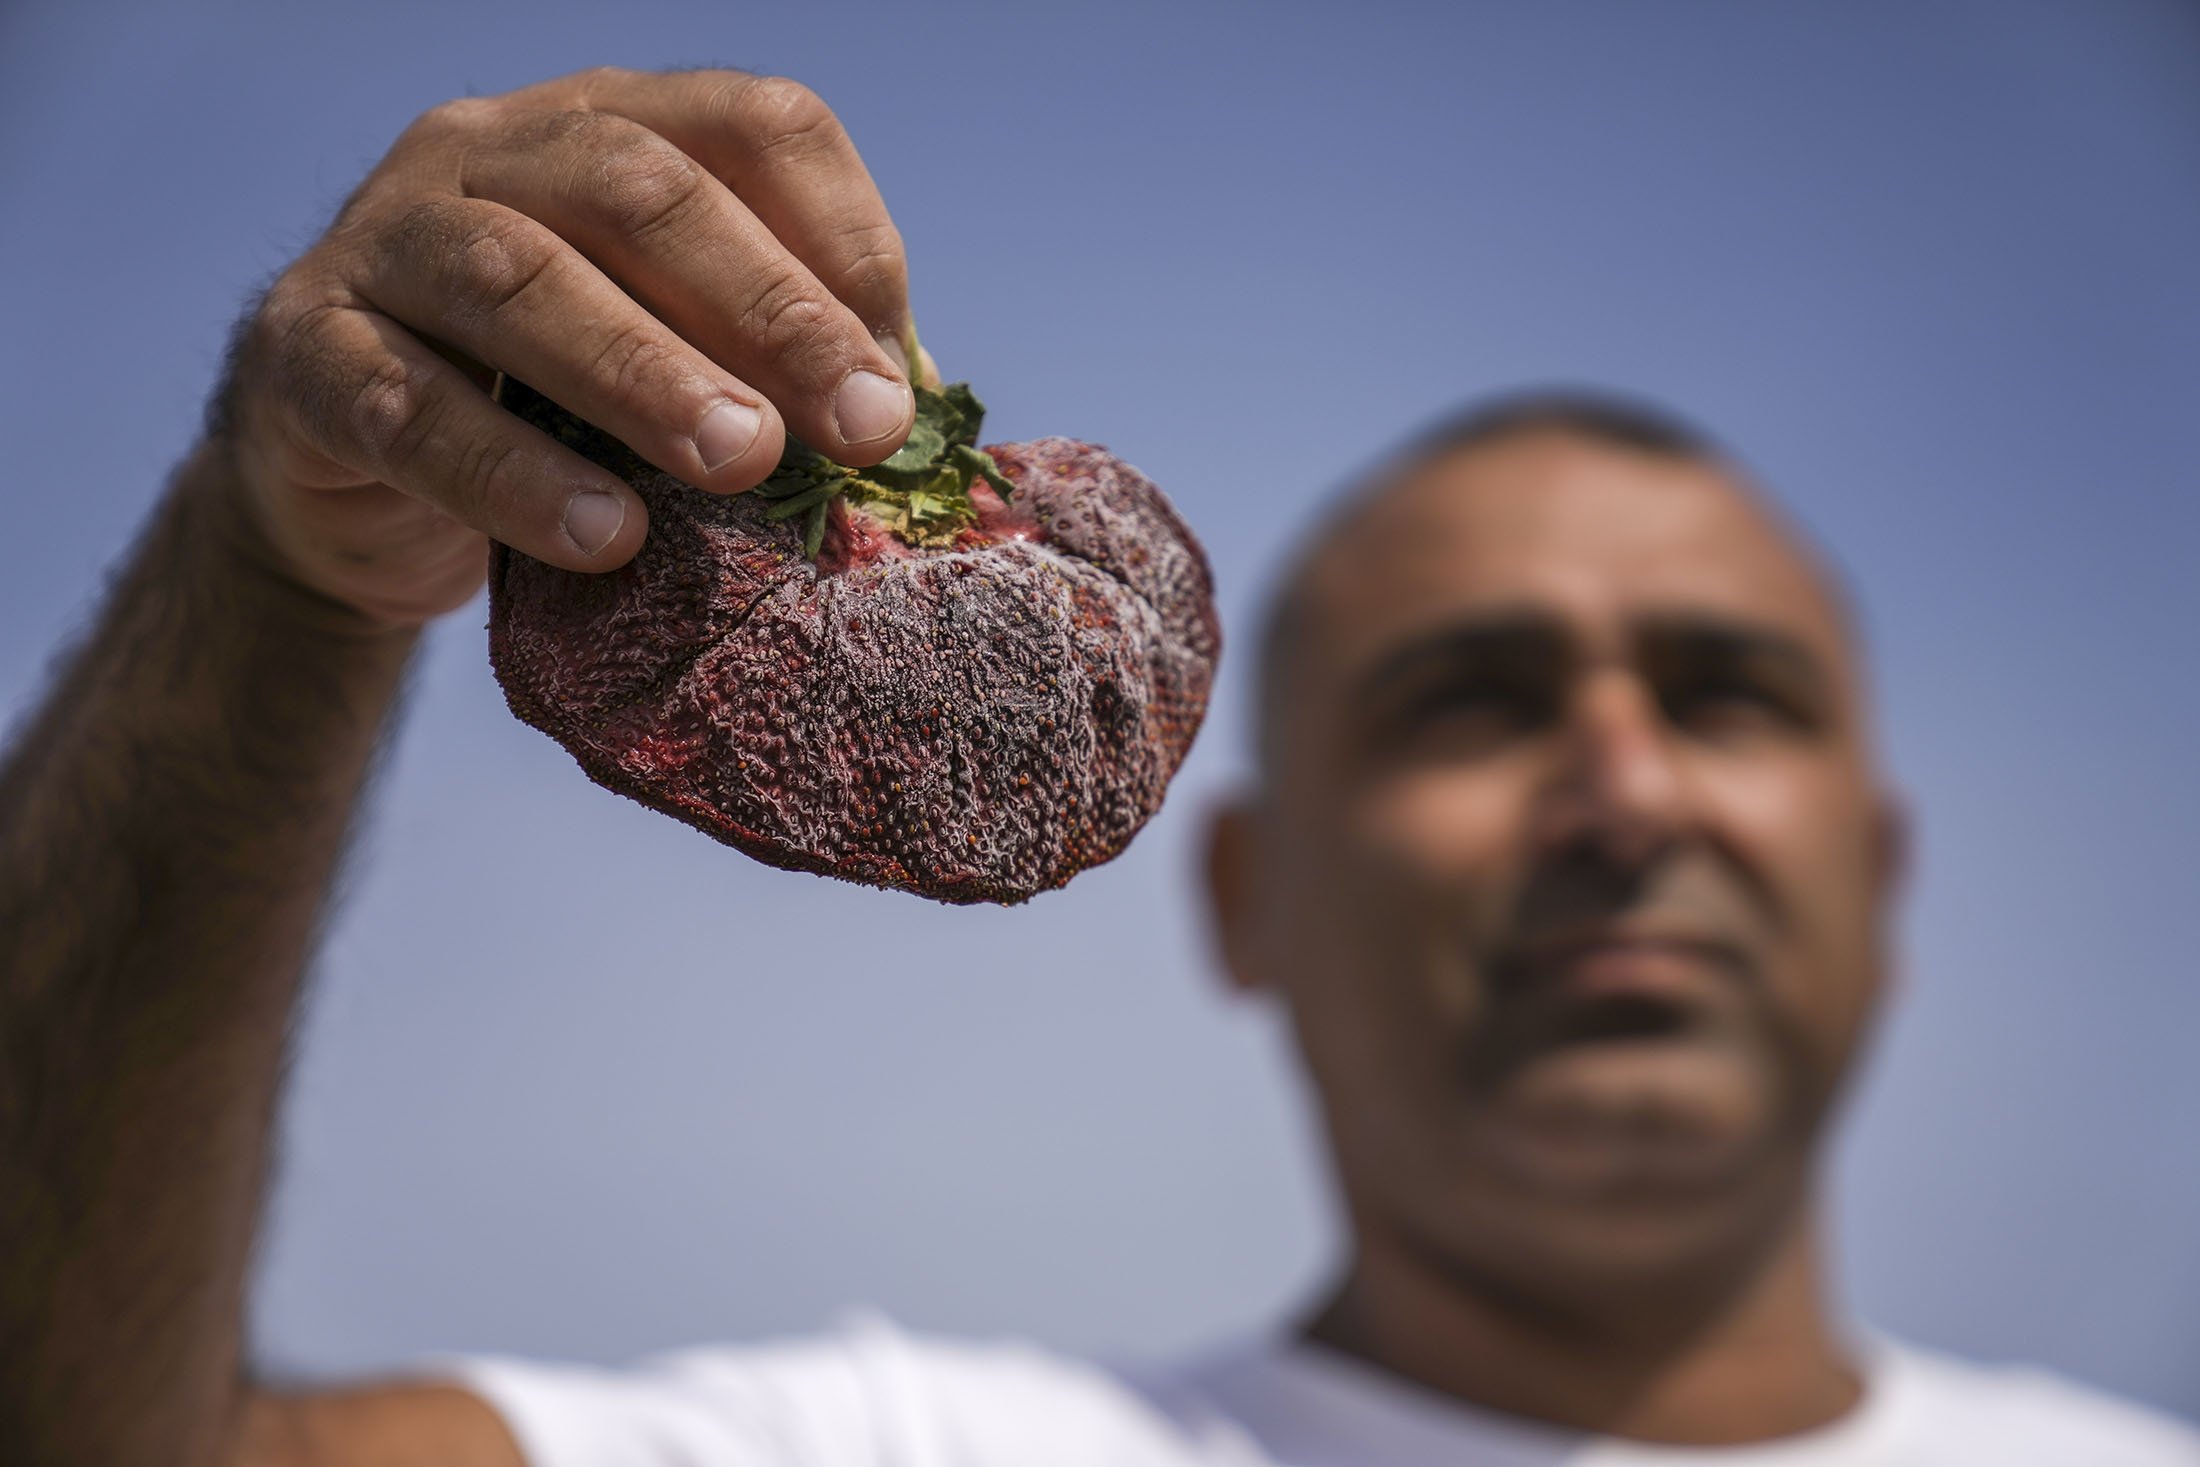 Israeli farmer Chahi Ariel holds a strawberry weighing a whopping 289 grams (over half a pound) in Kadima-Zoran, Israel, Feb. 17, 2022. (AP Photo)